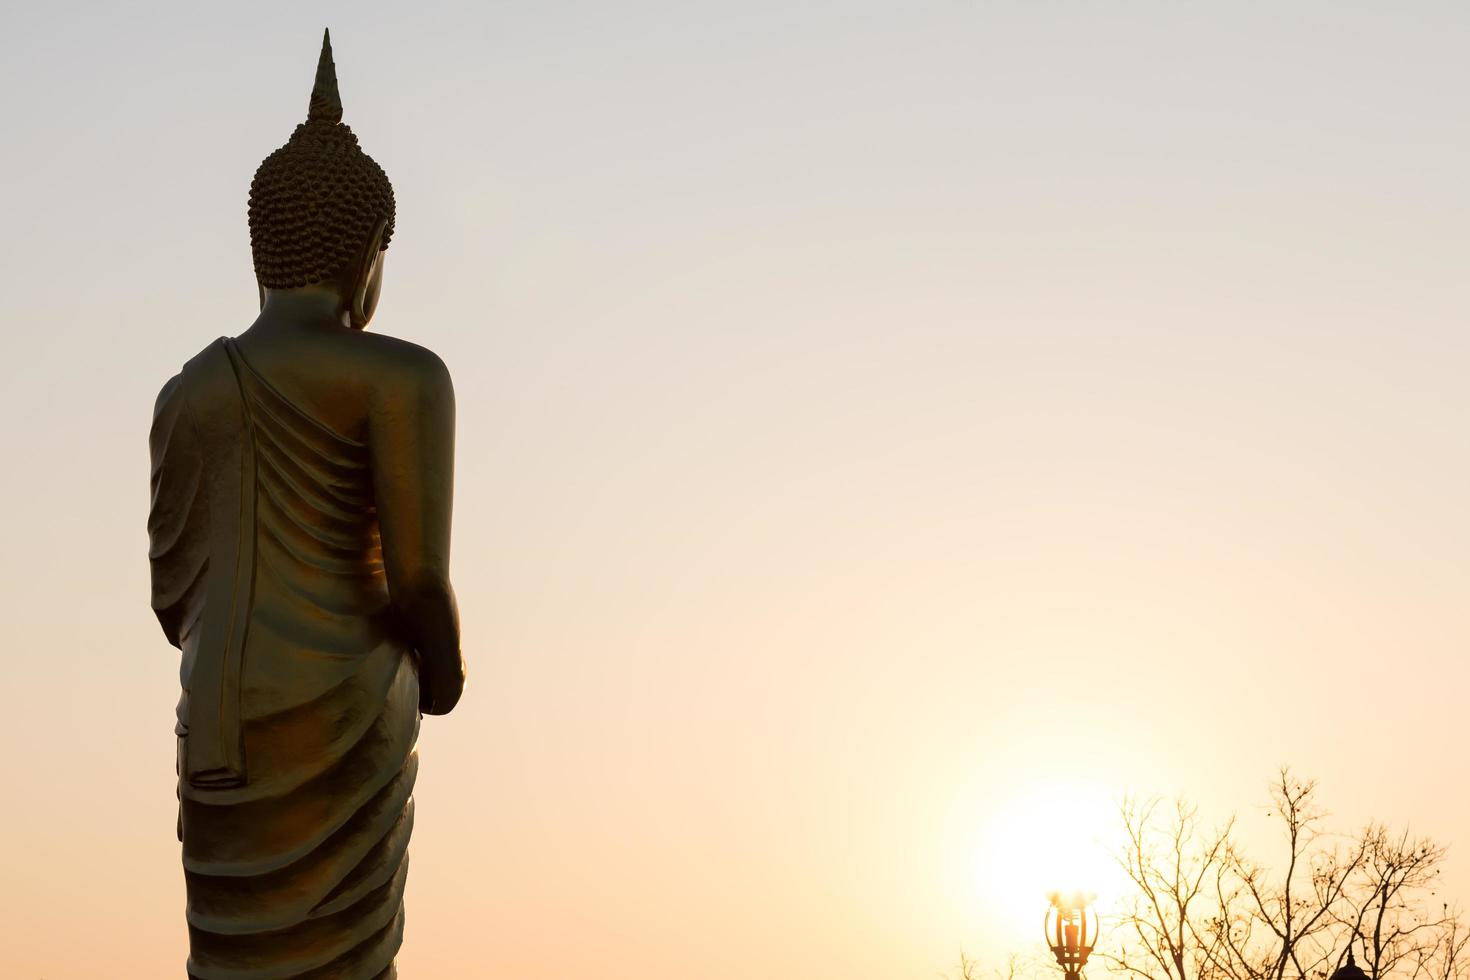 buddha stehende solare almosen. foto